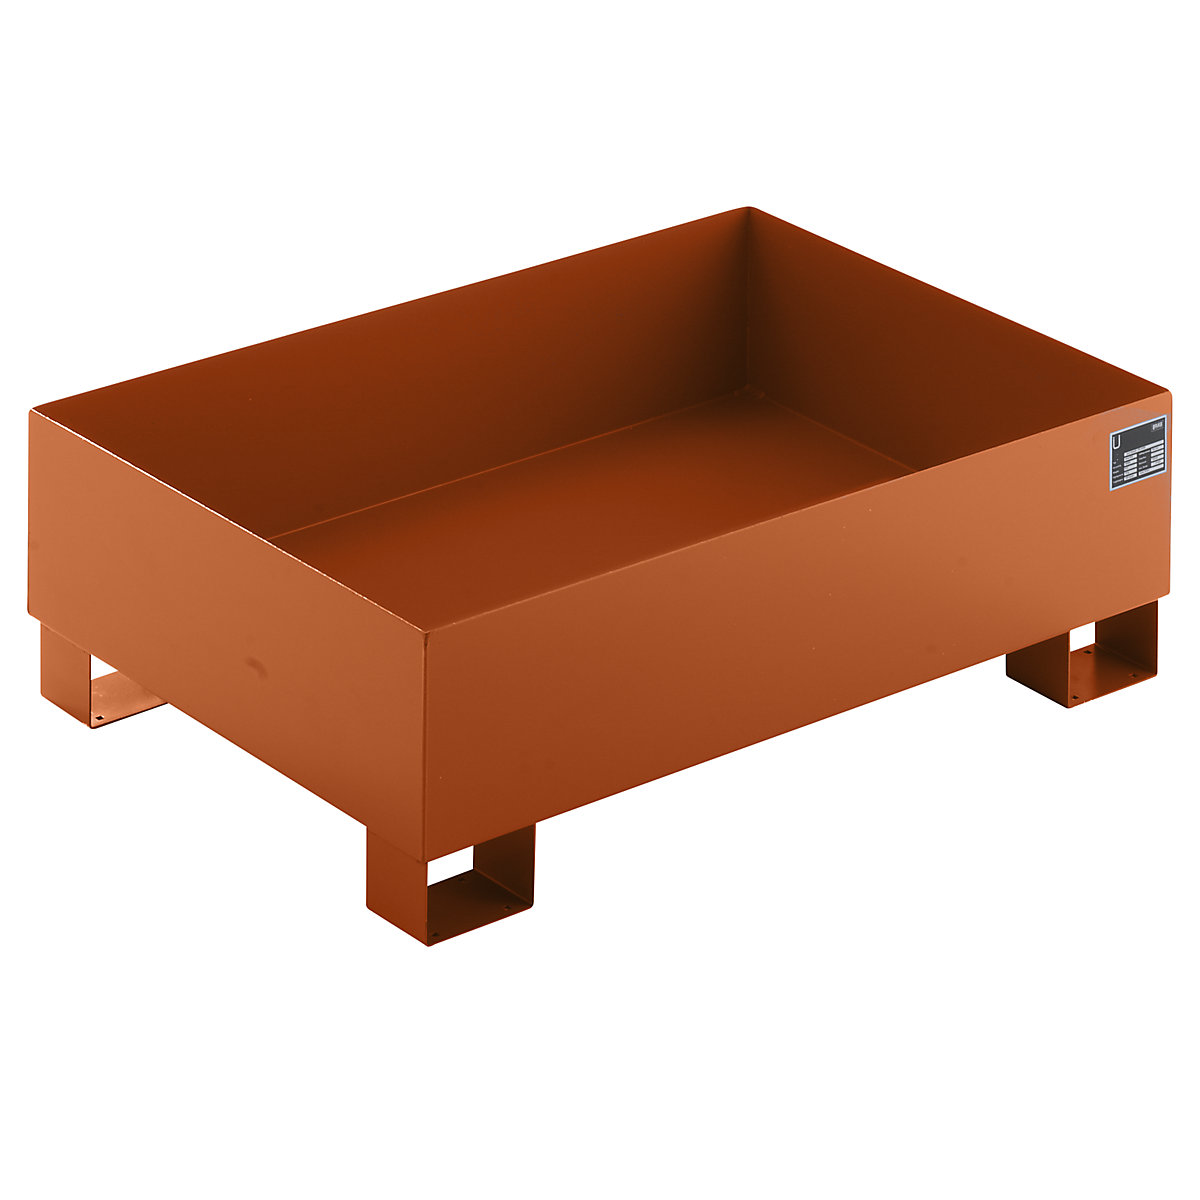 EUROKRAFTbasic – Sump tray made from sheet steel, LxWxH 1200 x 800 x 360 mm, orange RAL 2000